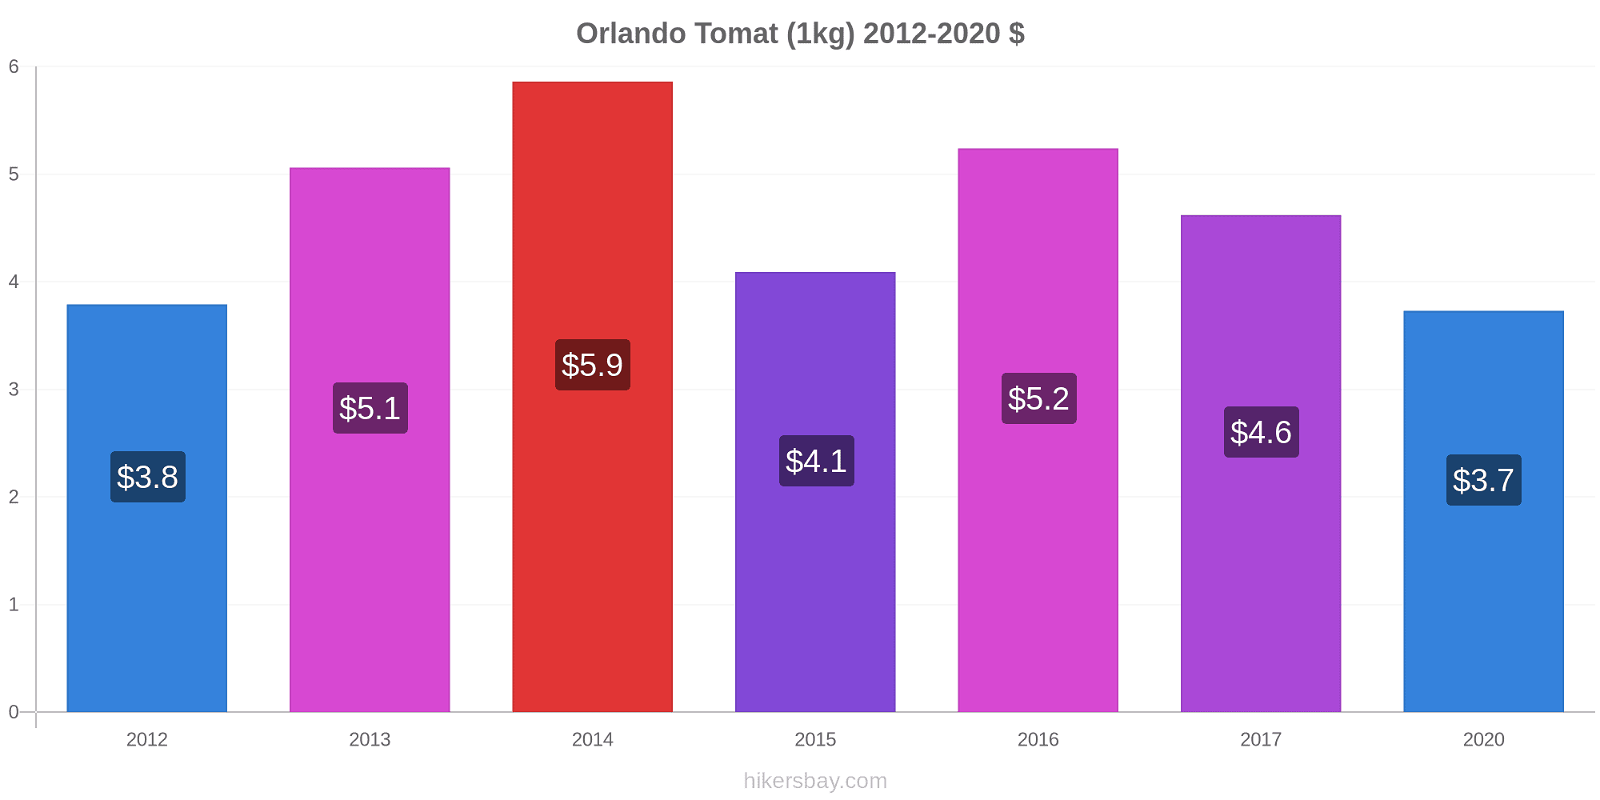 Orlando prisendringer Tomat (1kg) hikersbay.com